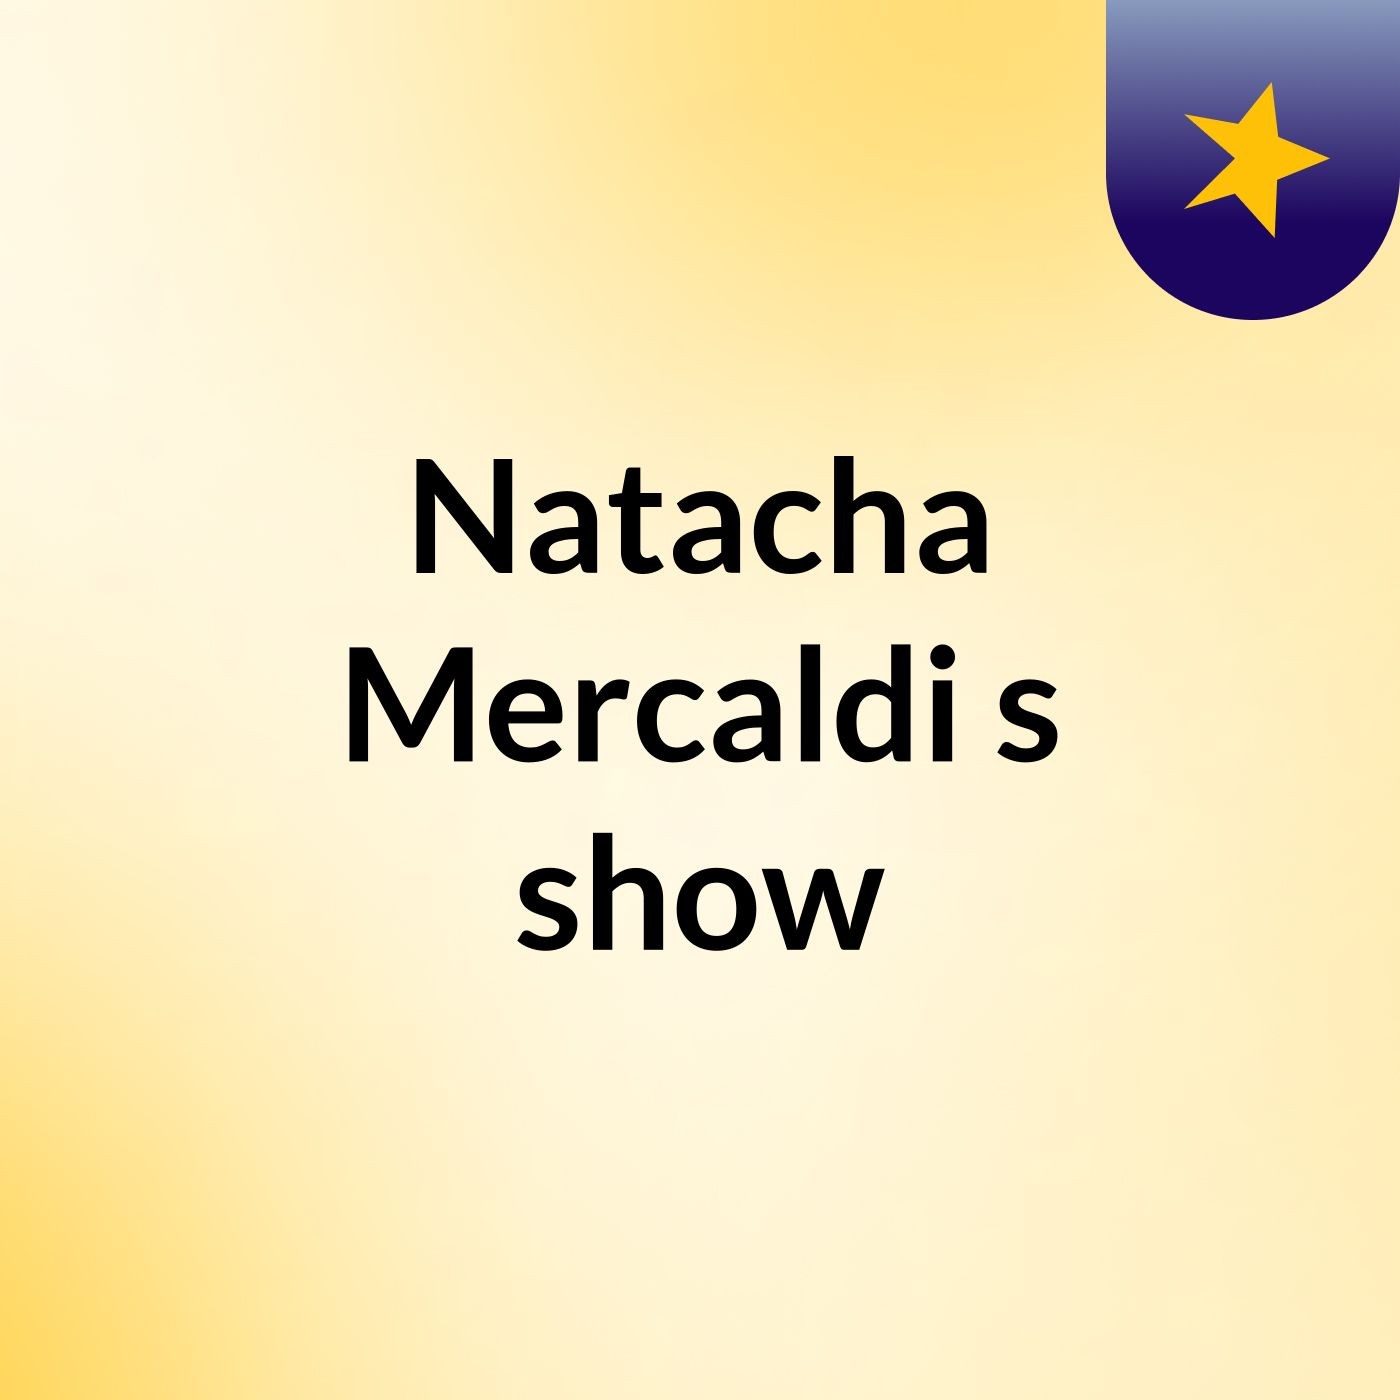 Natacha Mercaldi's show